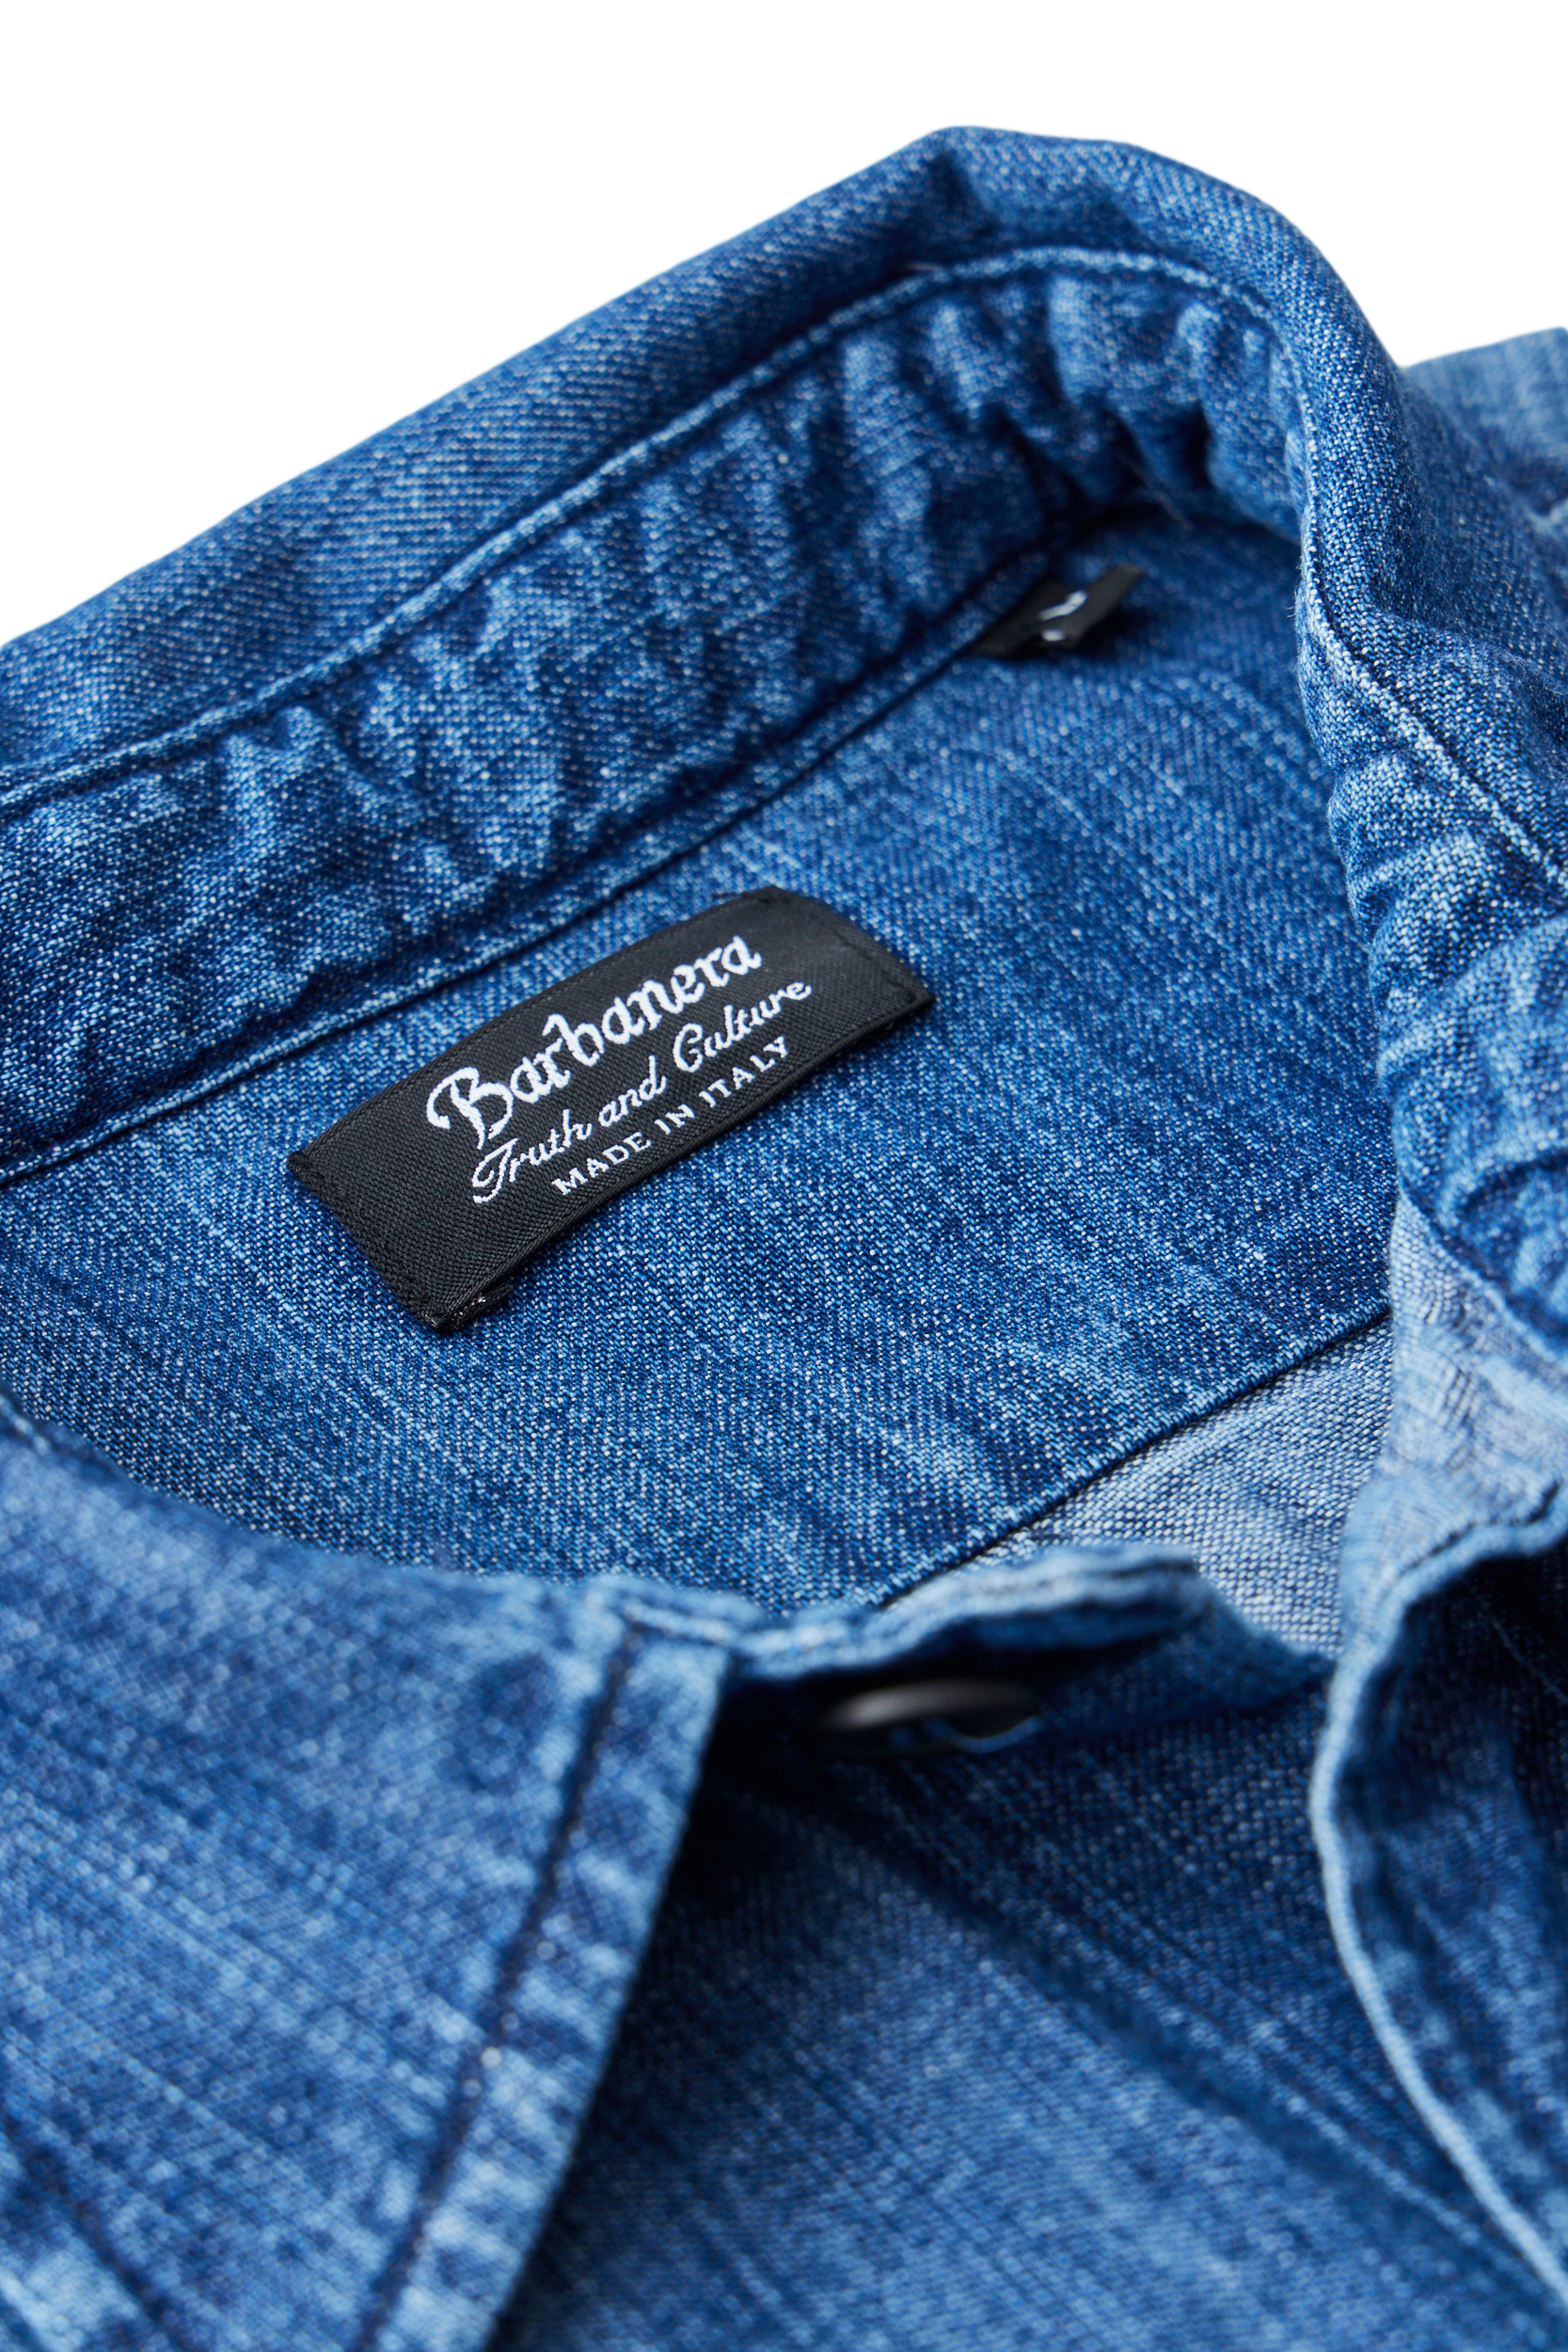 Single Pocket Shirt 4 oz. Denim - DK Wash SF20 – Civilianaire